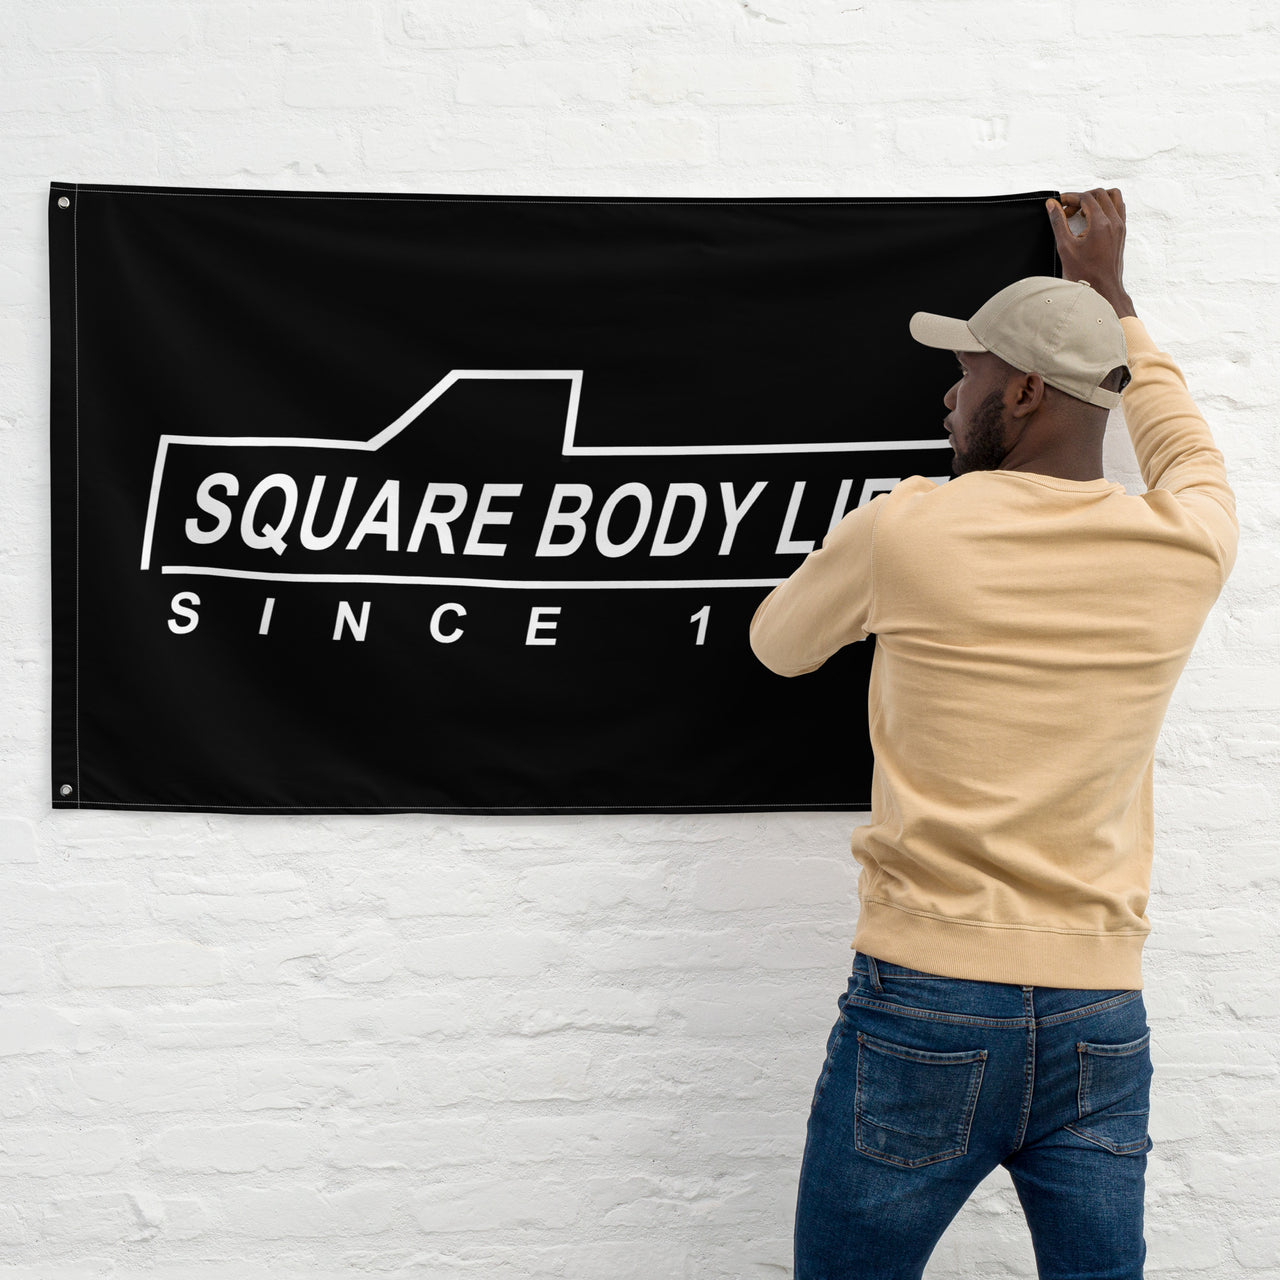 Squarebody Flag - Square Body Life